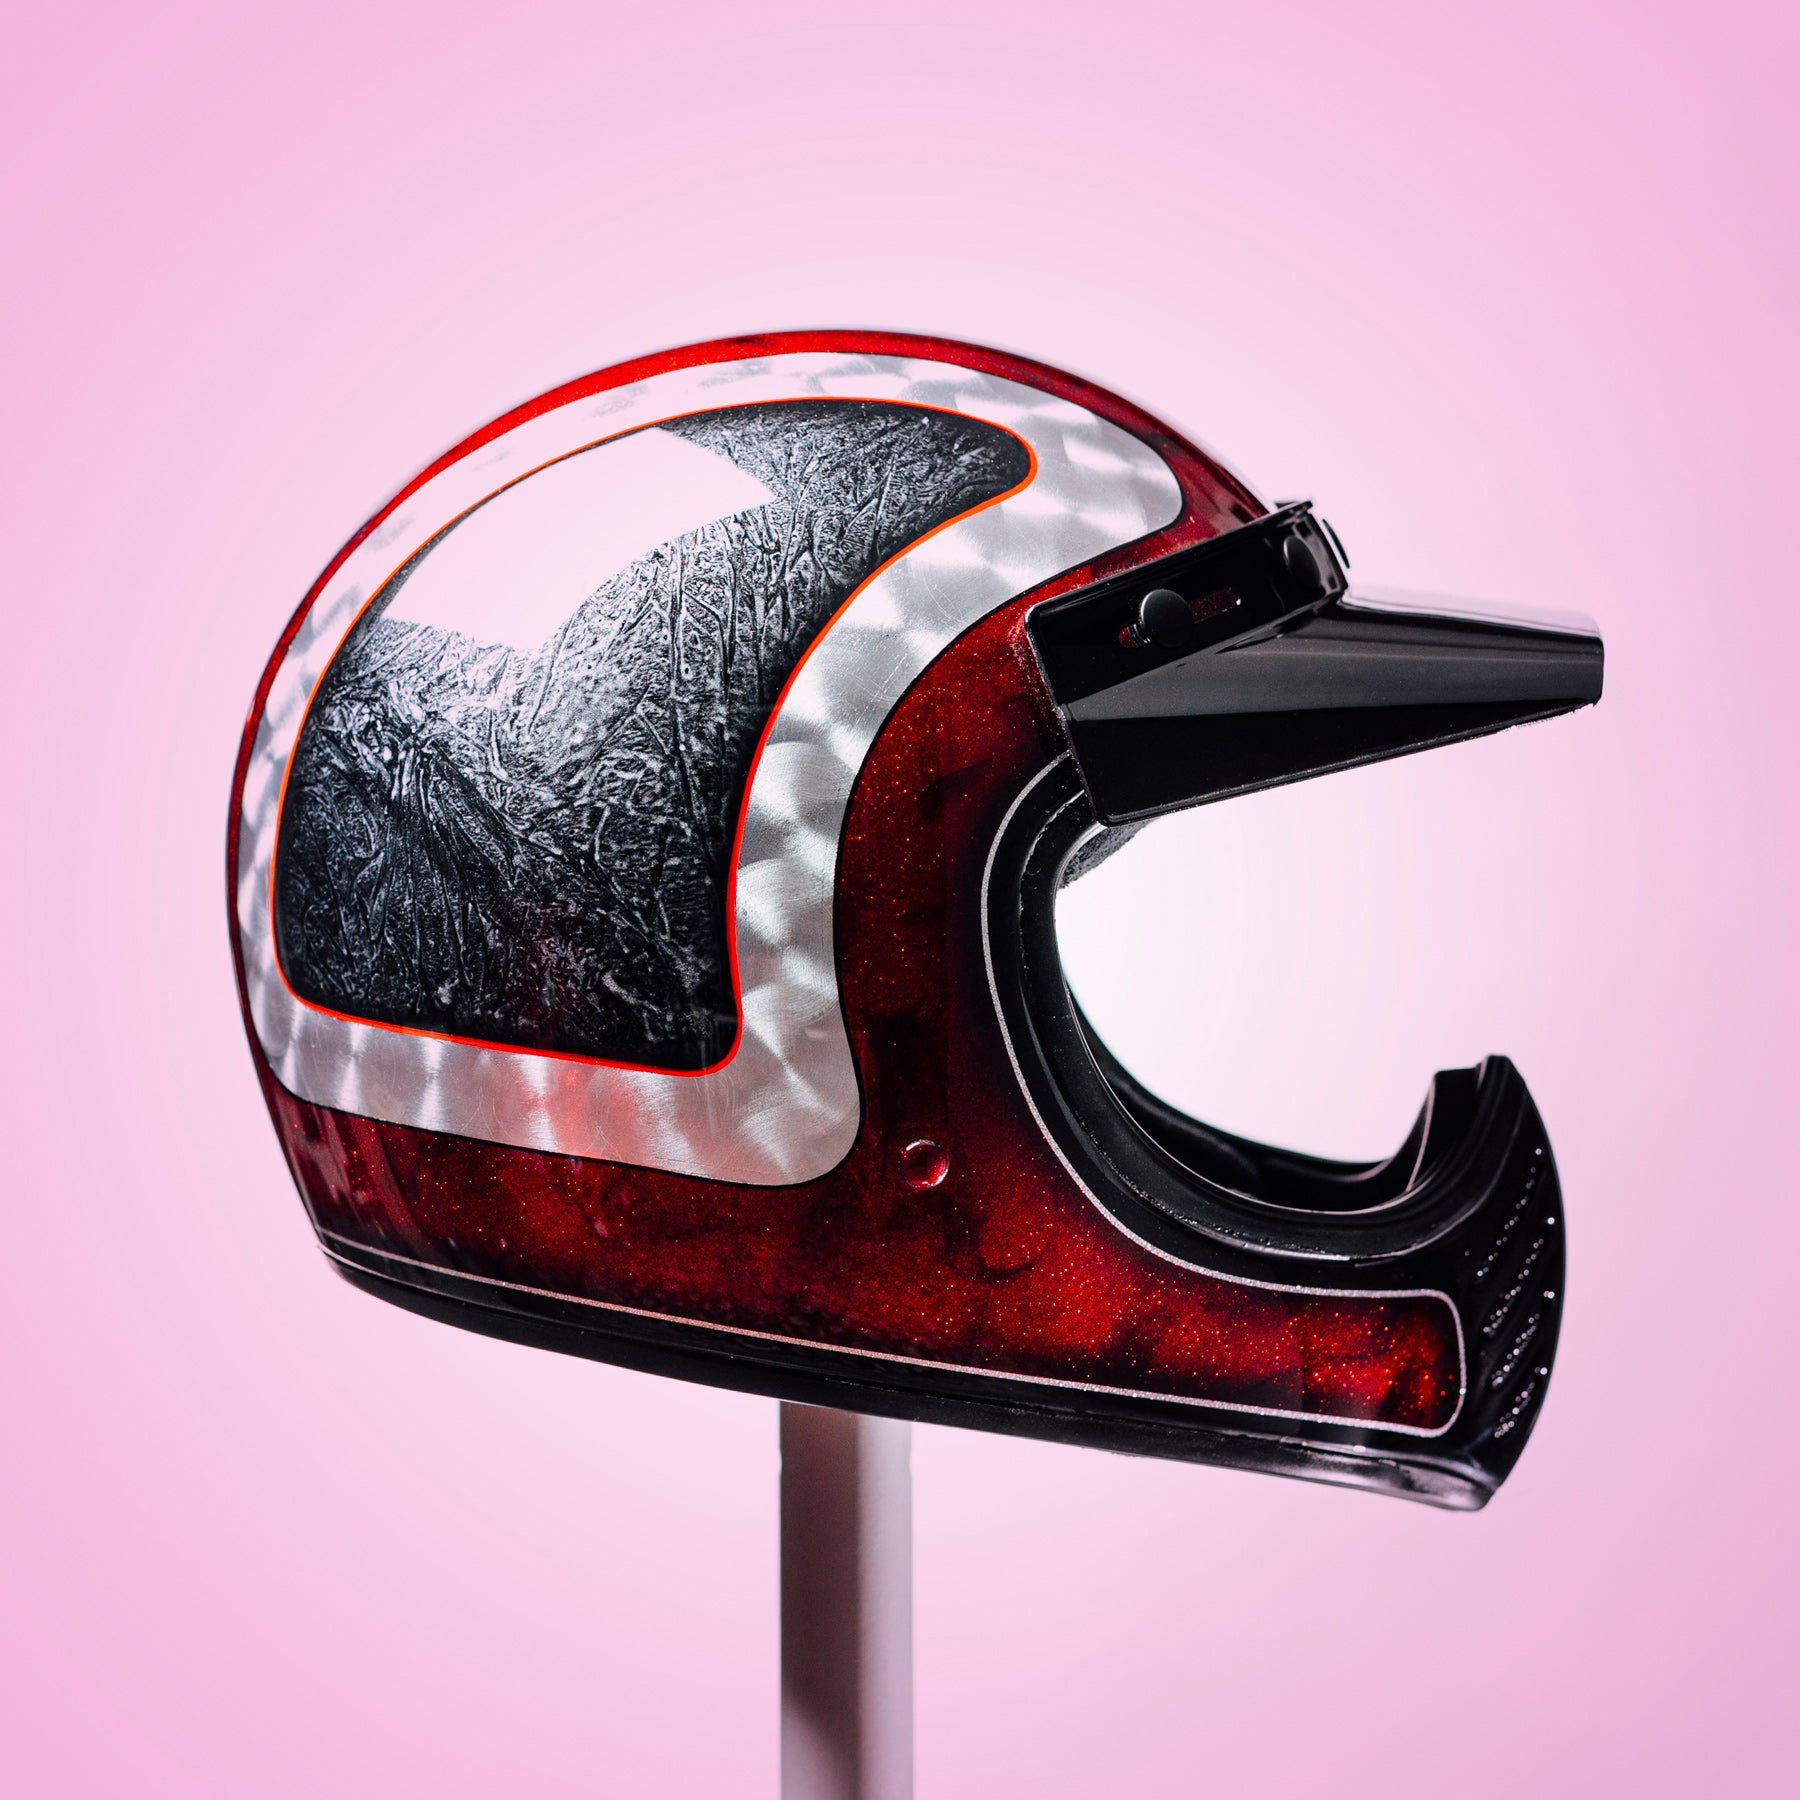 Trippy Ten Helmet Art Show Pittsburgh Boosted Brad Barnes